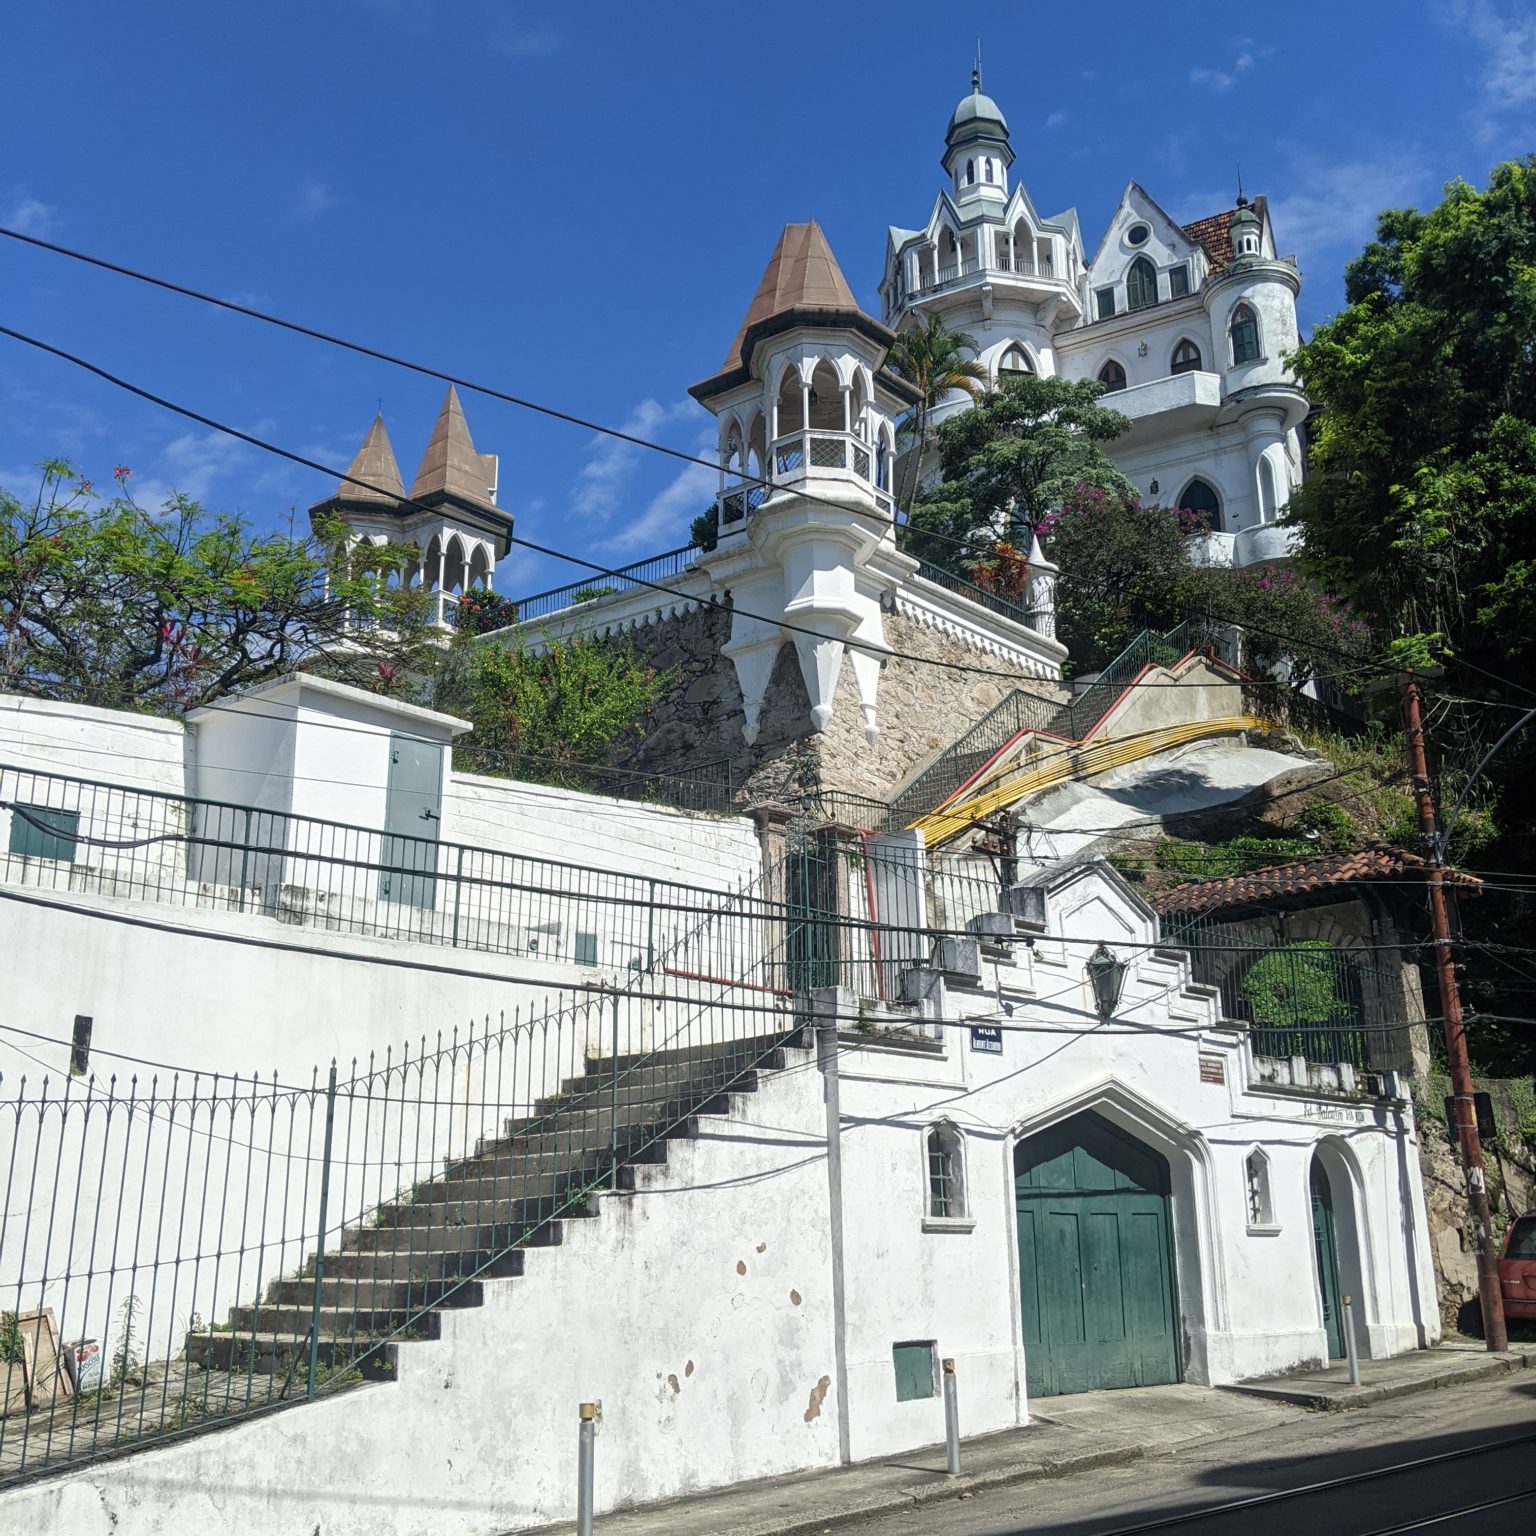 Discover the neighborhood of Santa Teresa